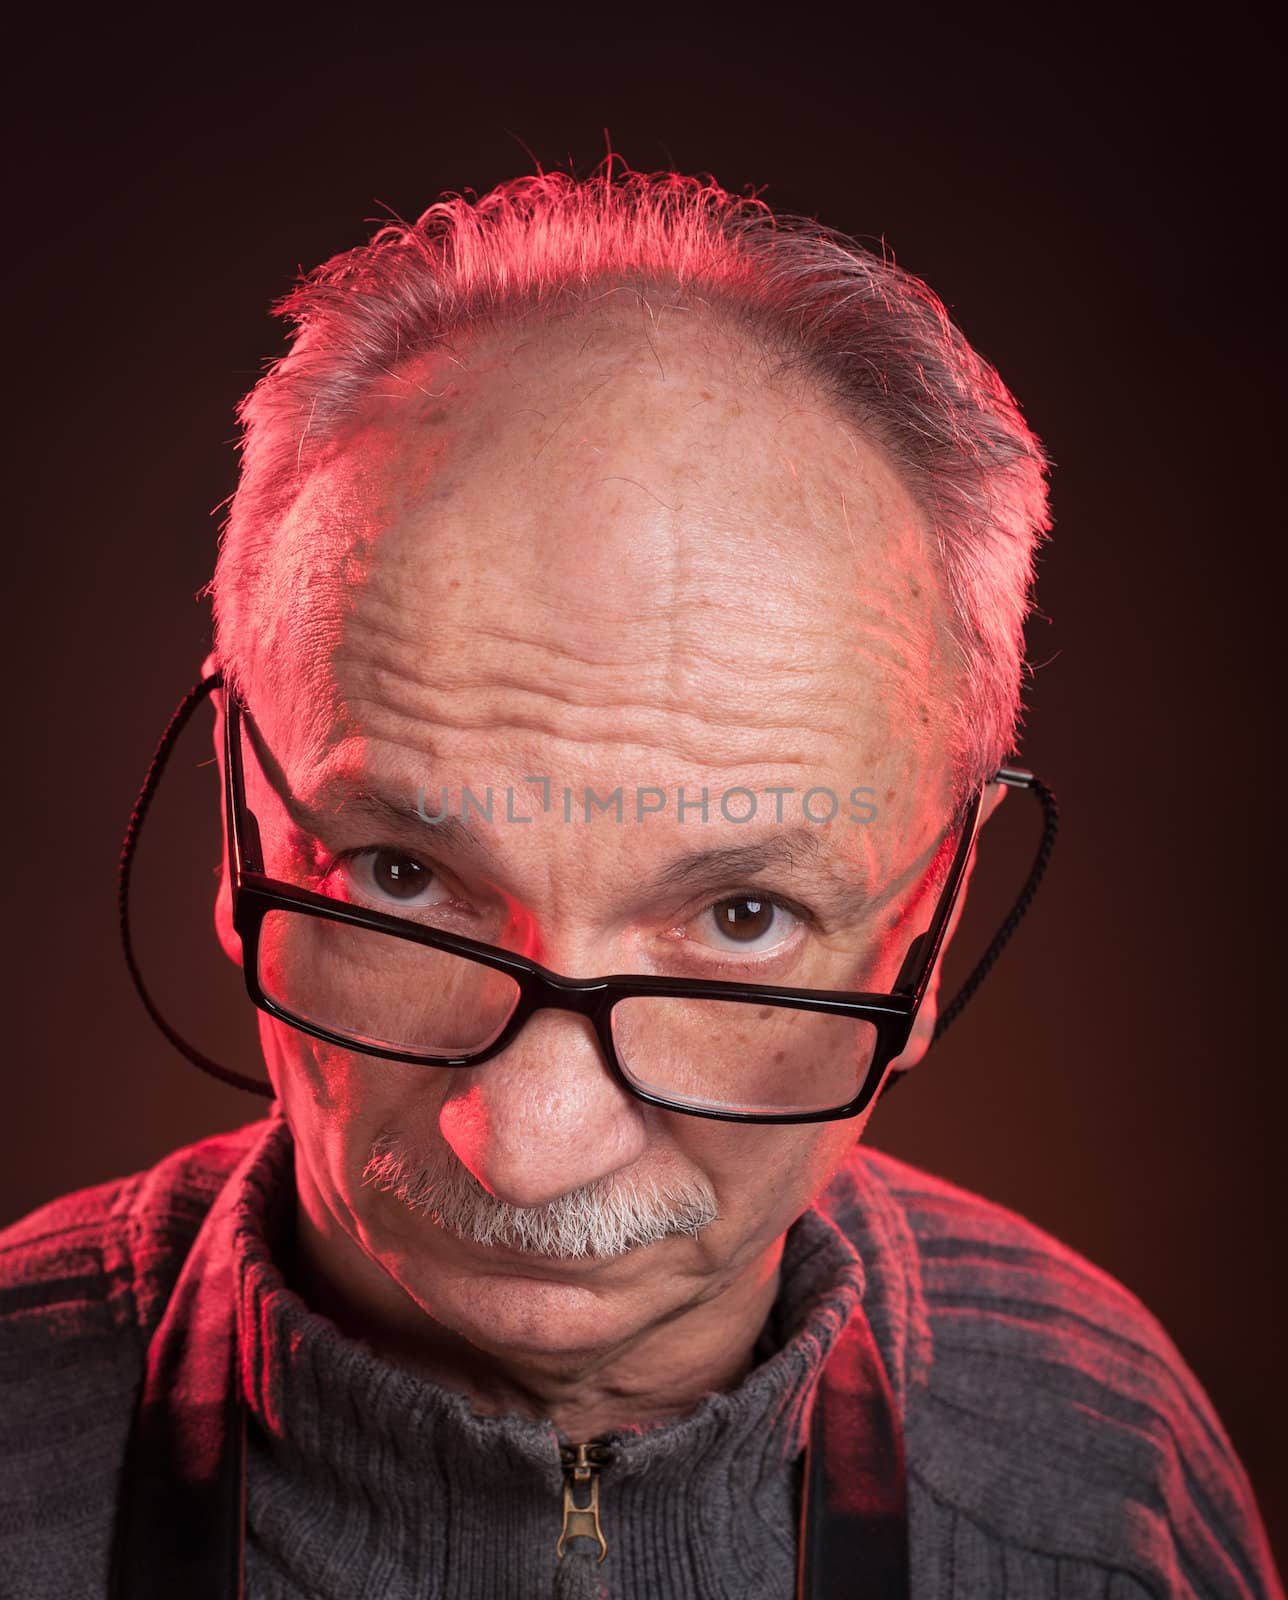 Portrait of handsome senior man with glasses